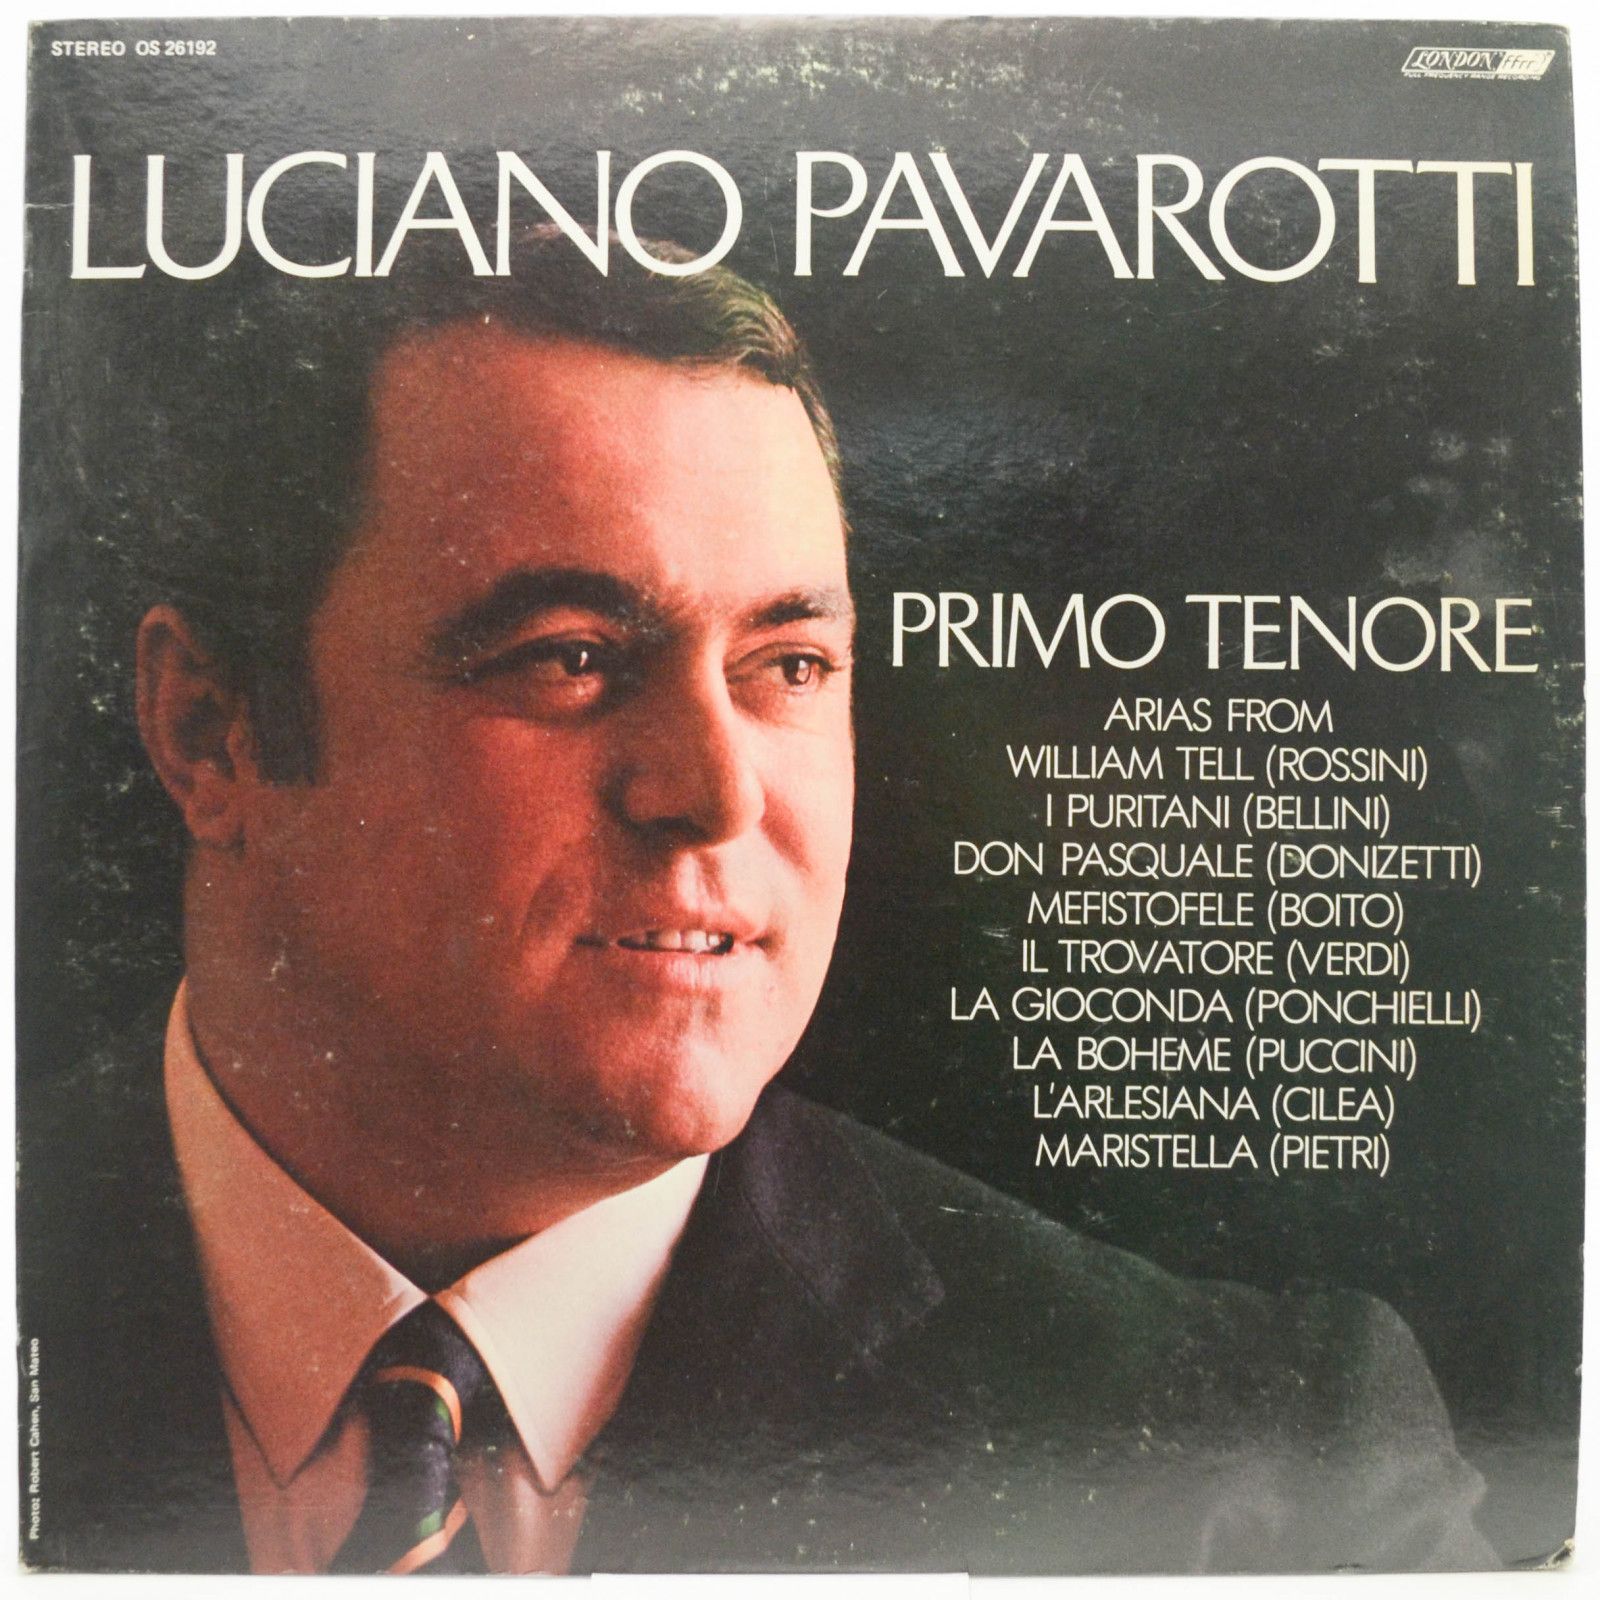 Luciano Pavarotti — Primo Tenore (UK), 1971